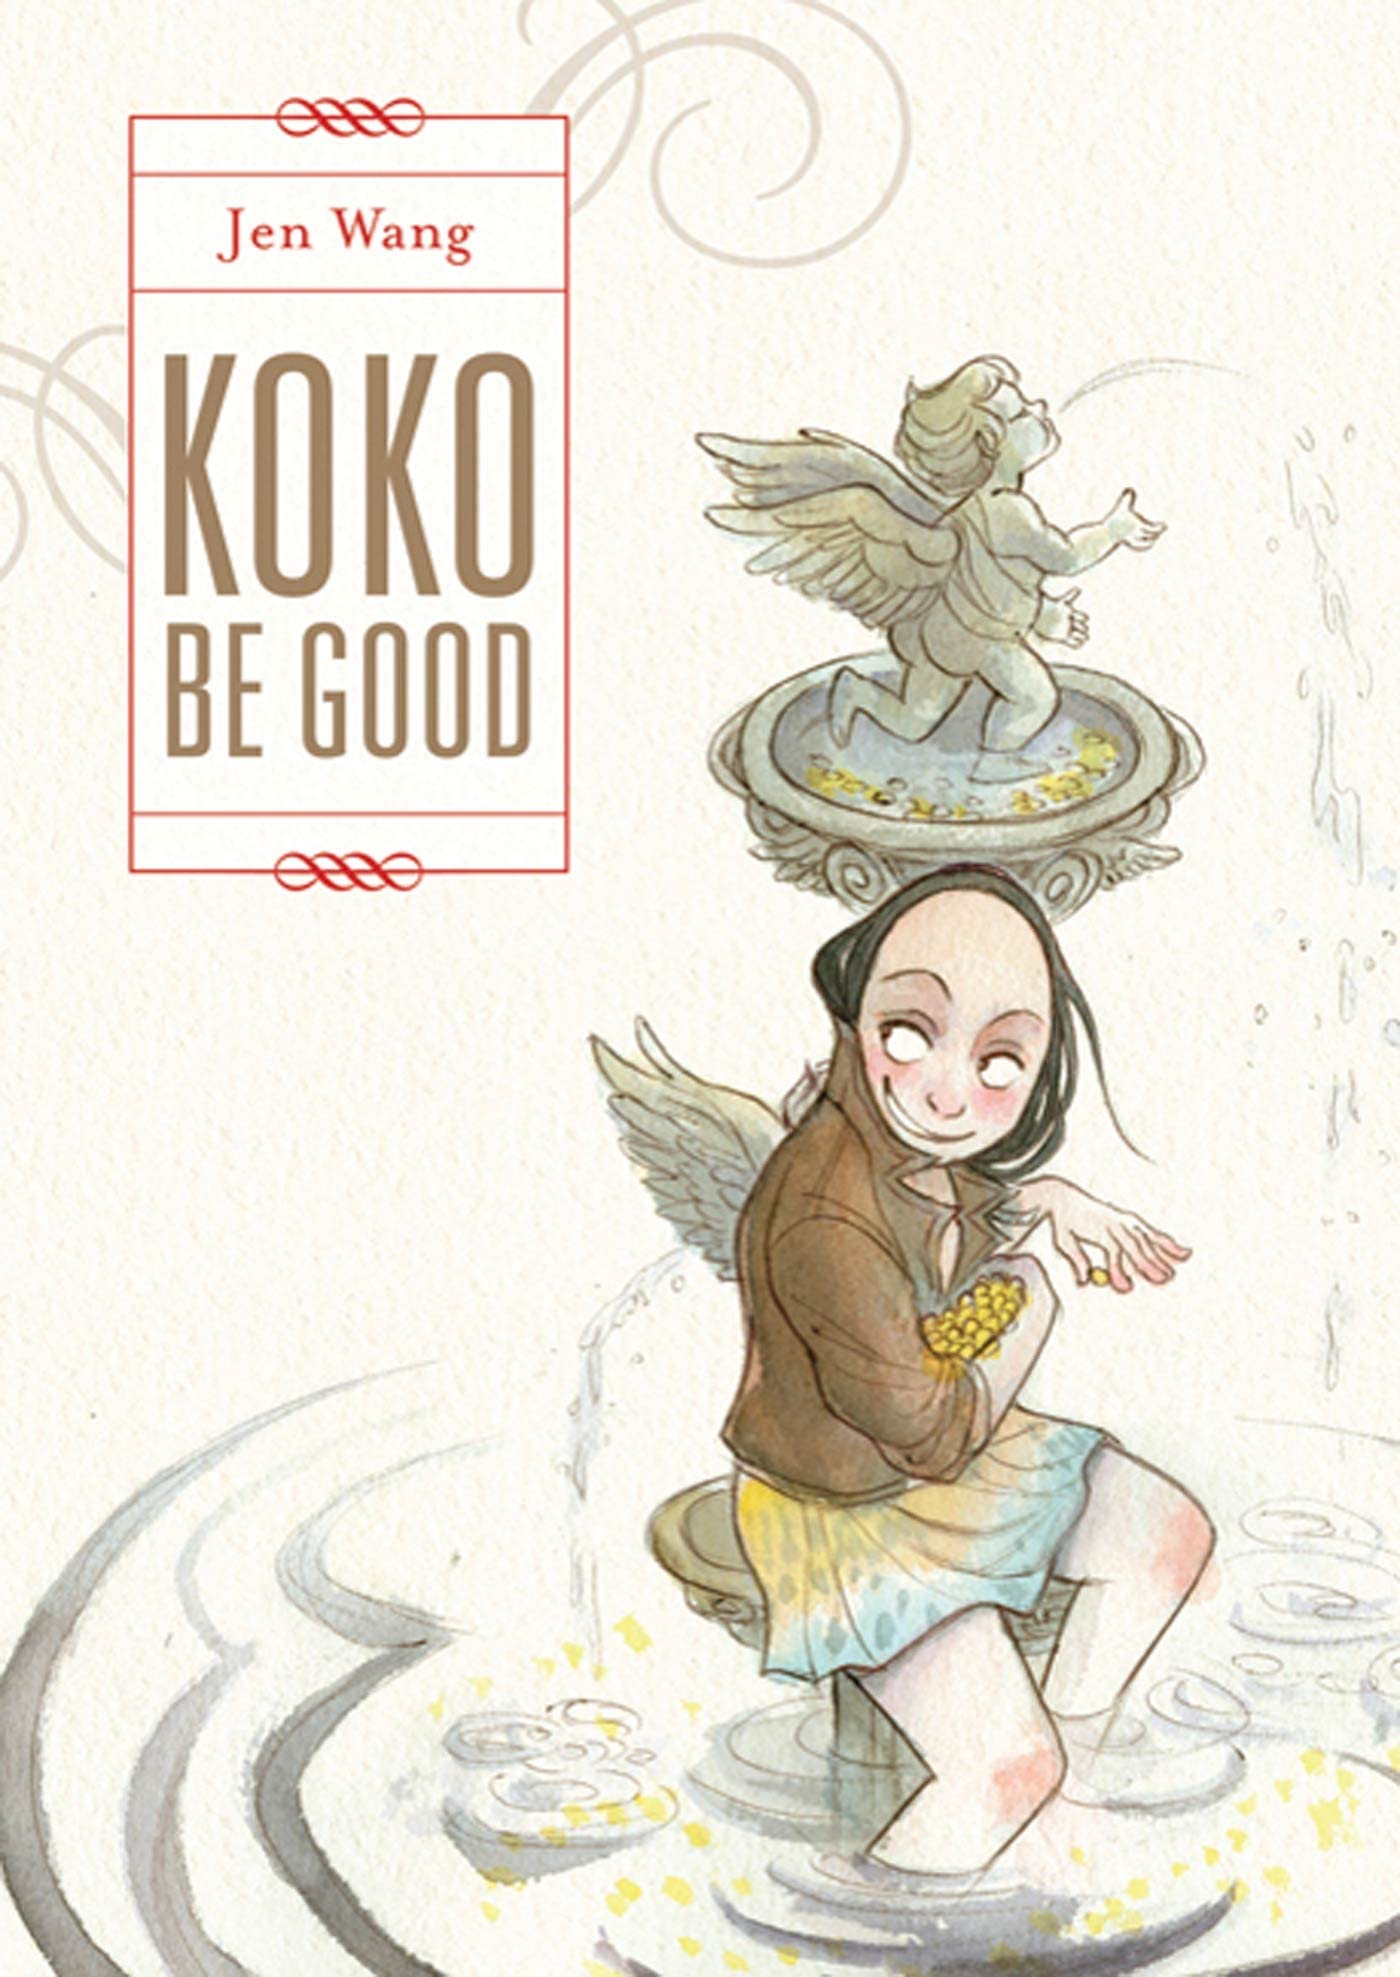 Jen Wang: Koko be good (2010, First Second)